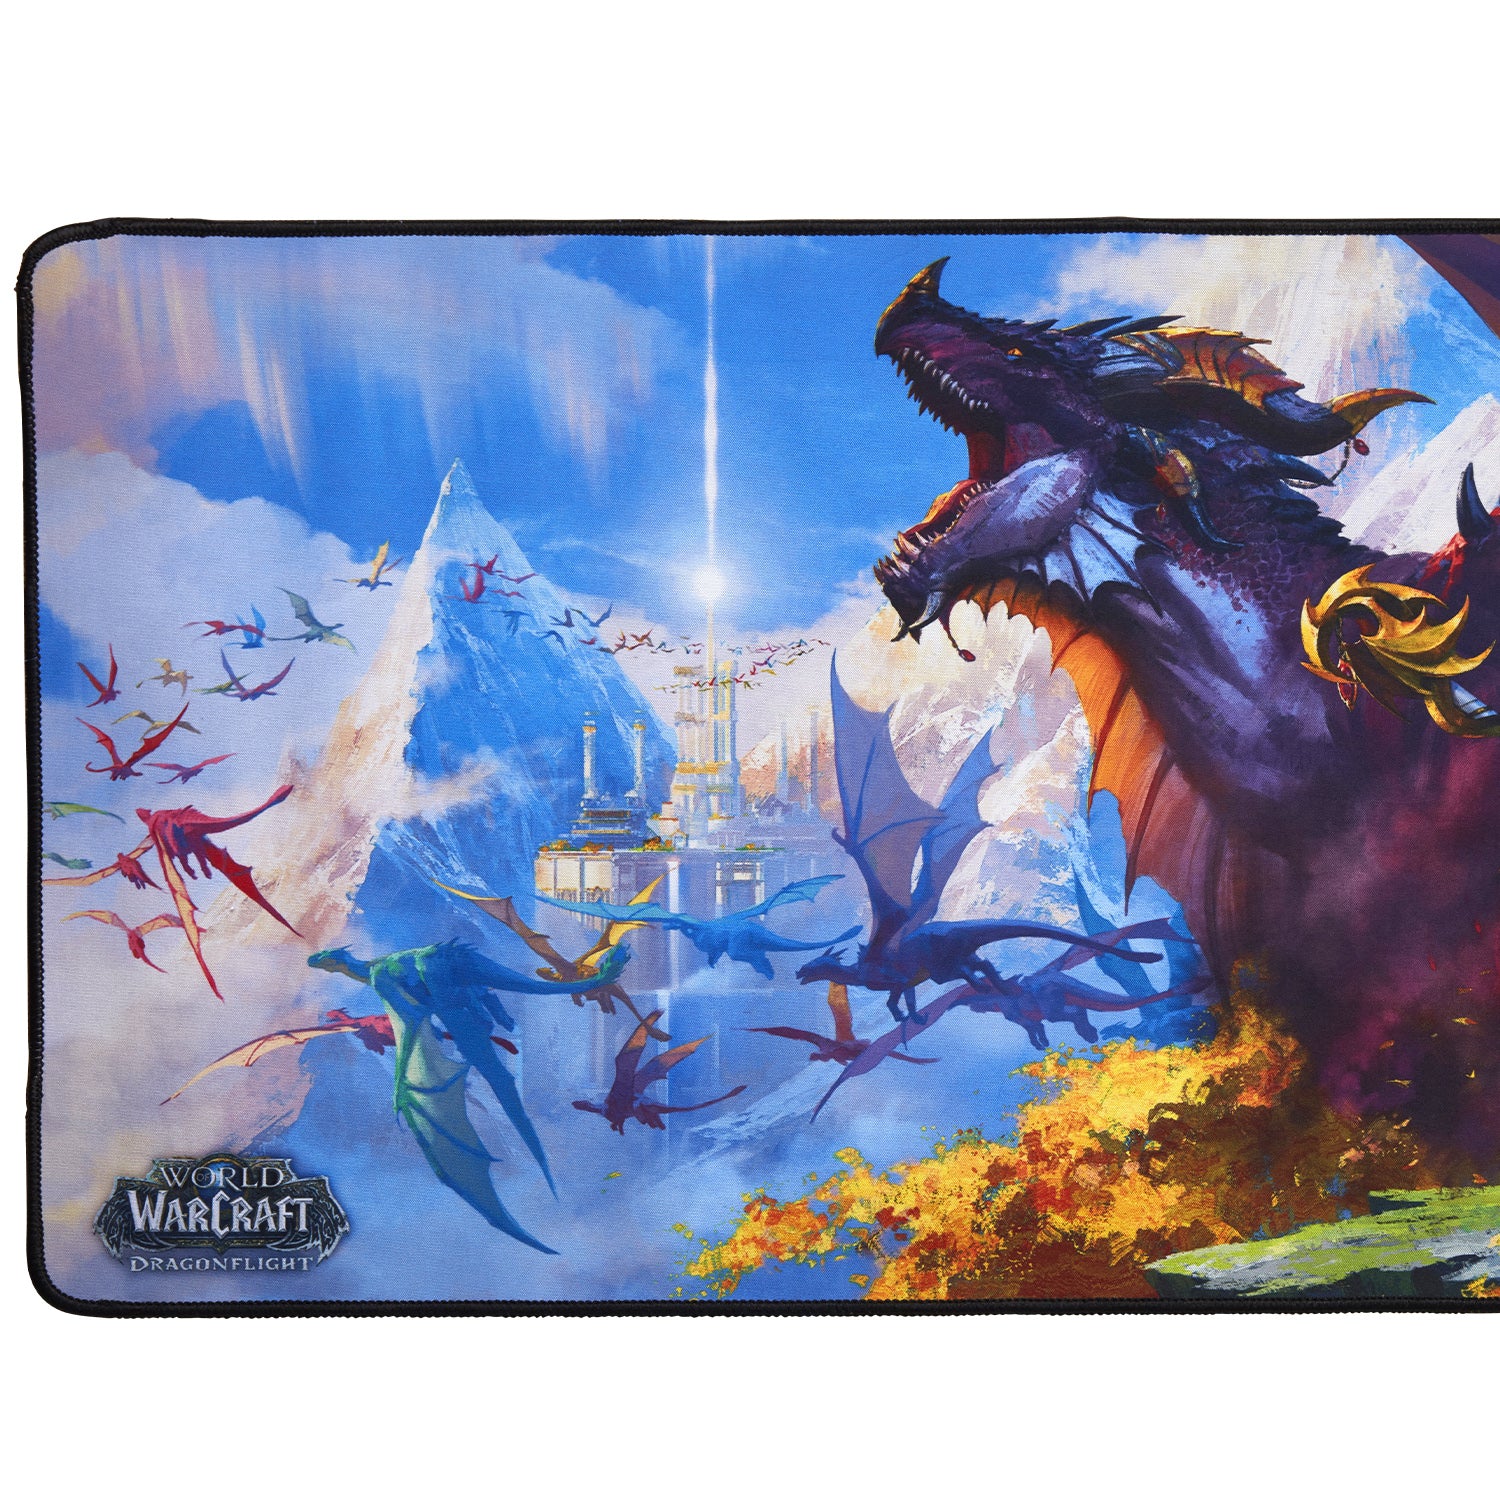 World of Warcraft Dragonflight Gaming Desk Mat - Close Up View